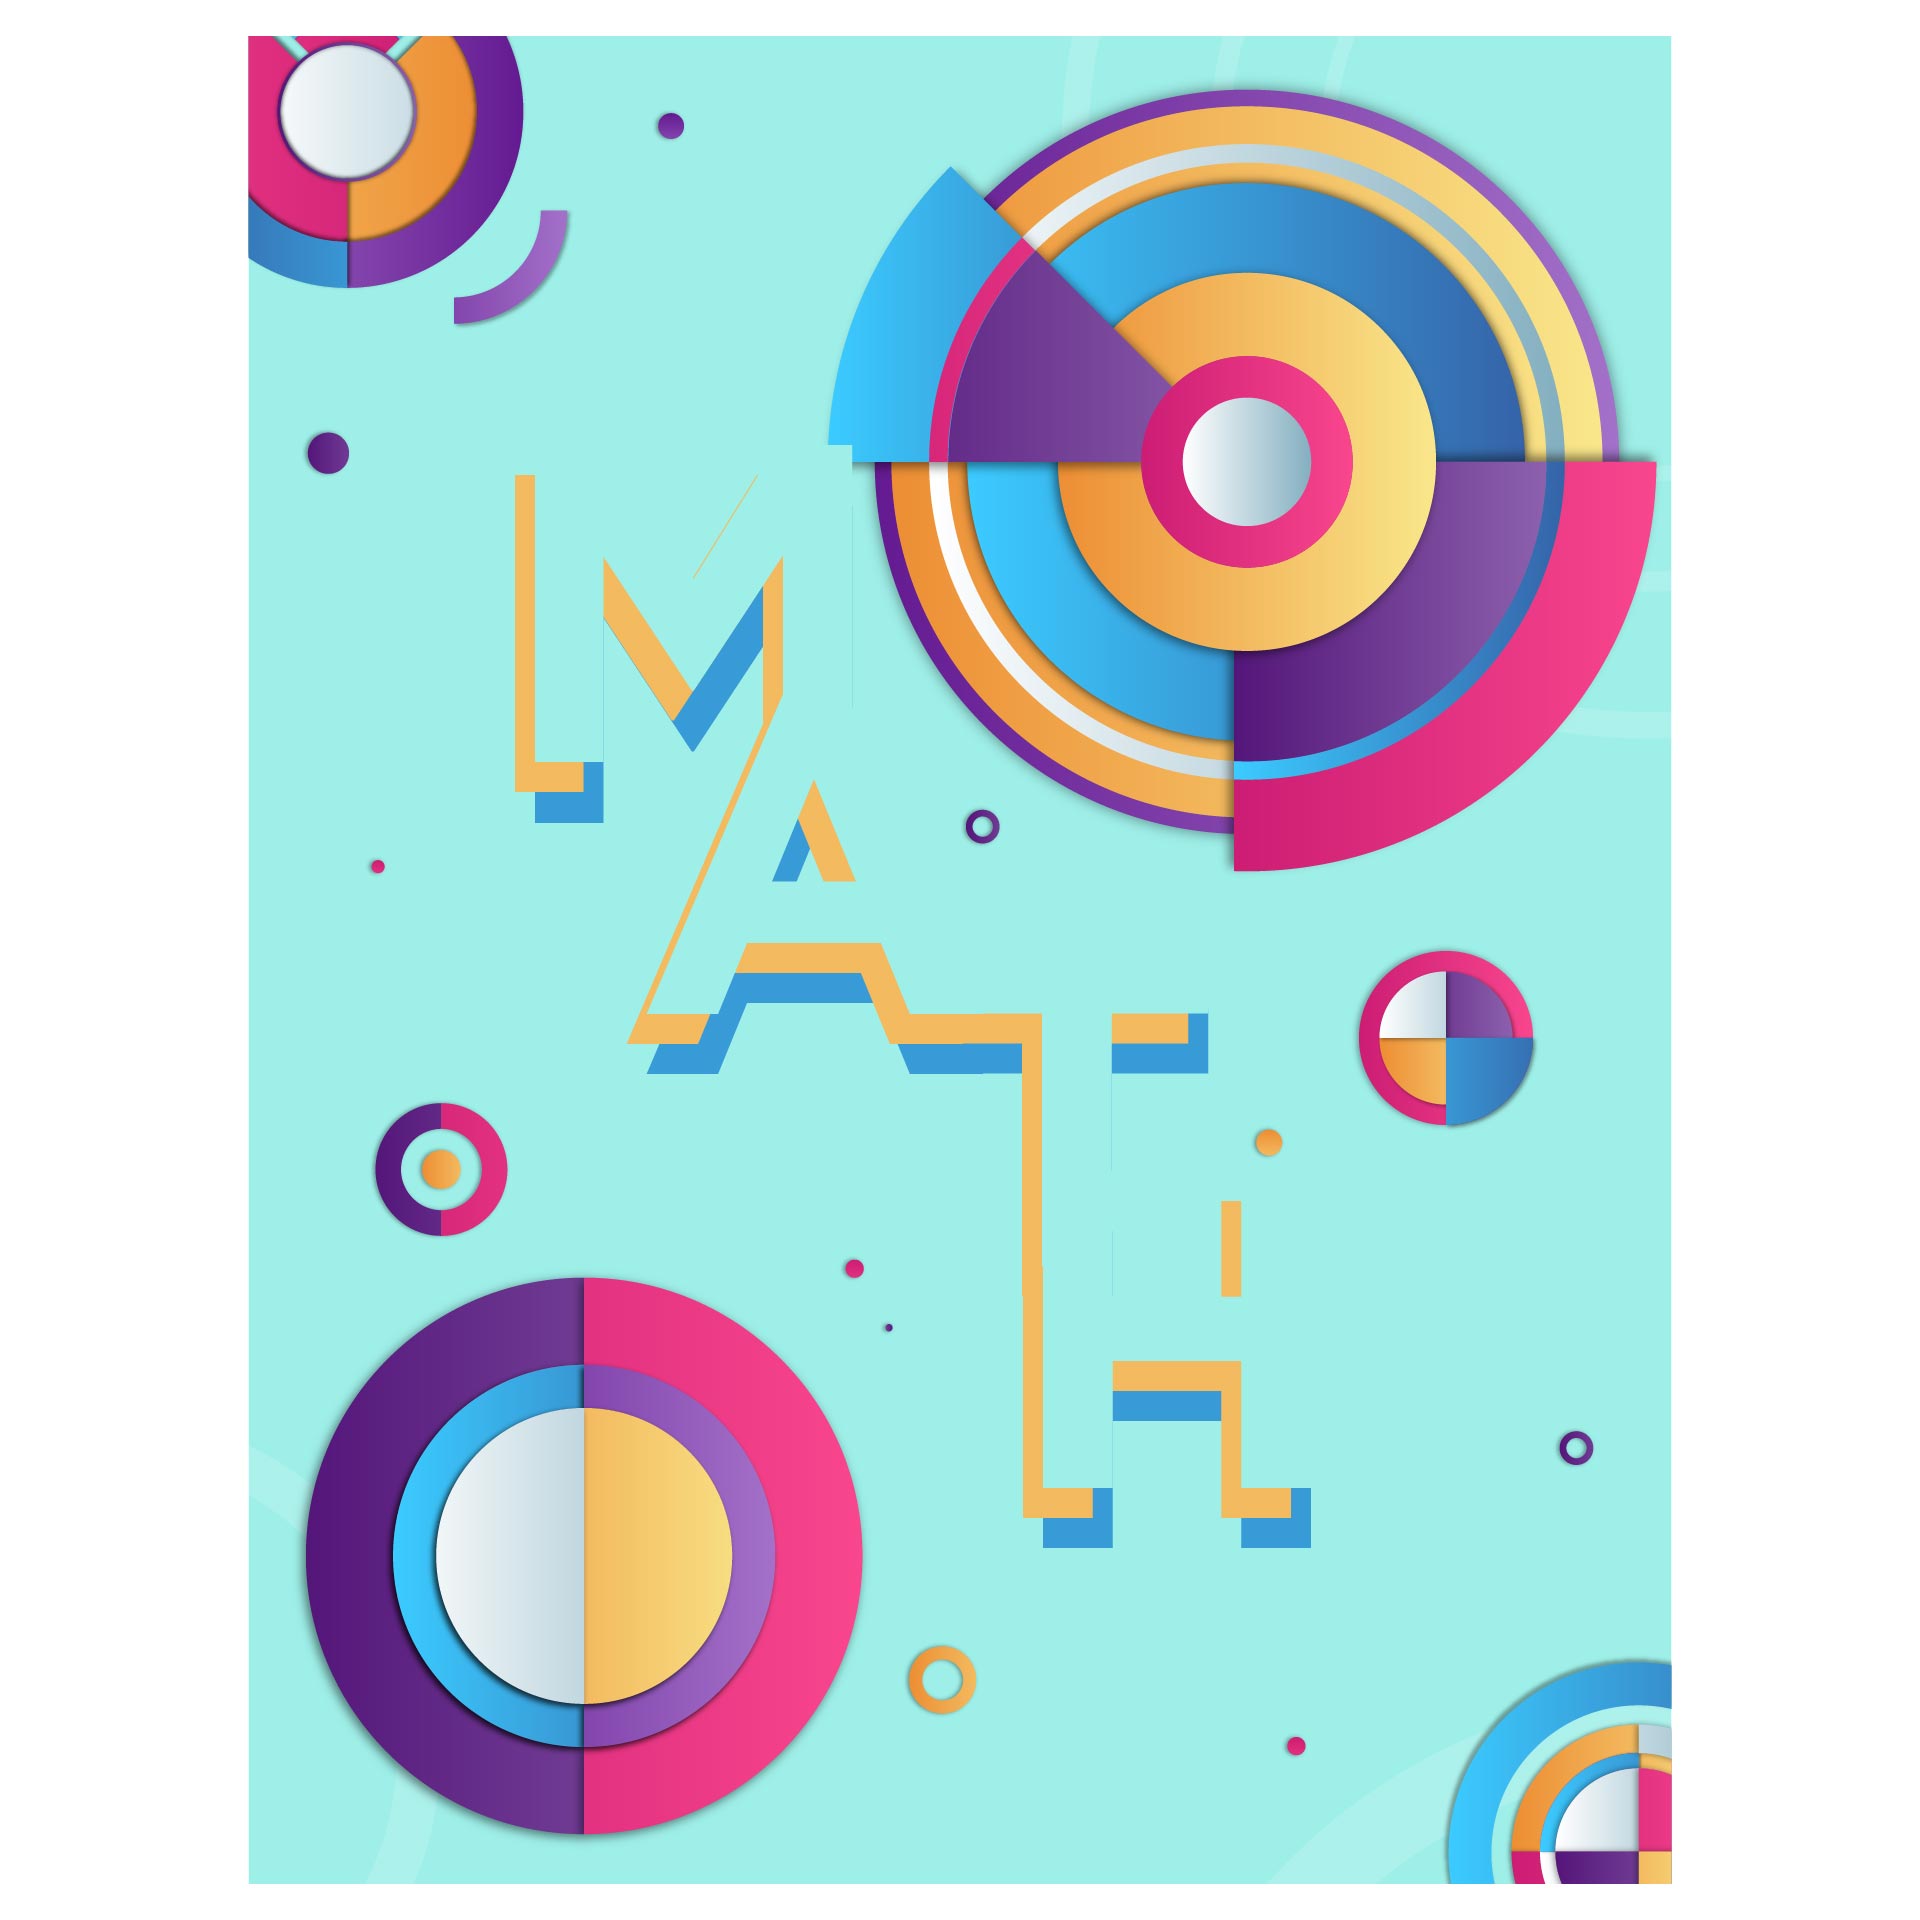 math binder cover ideas